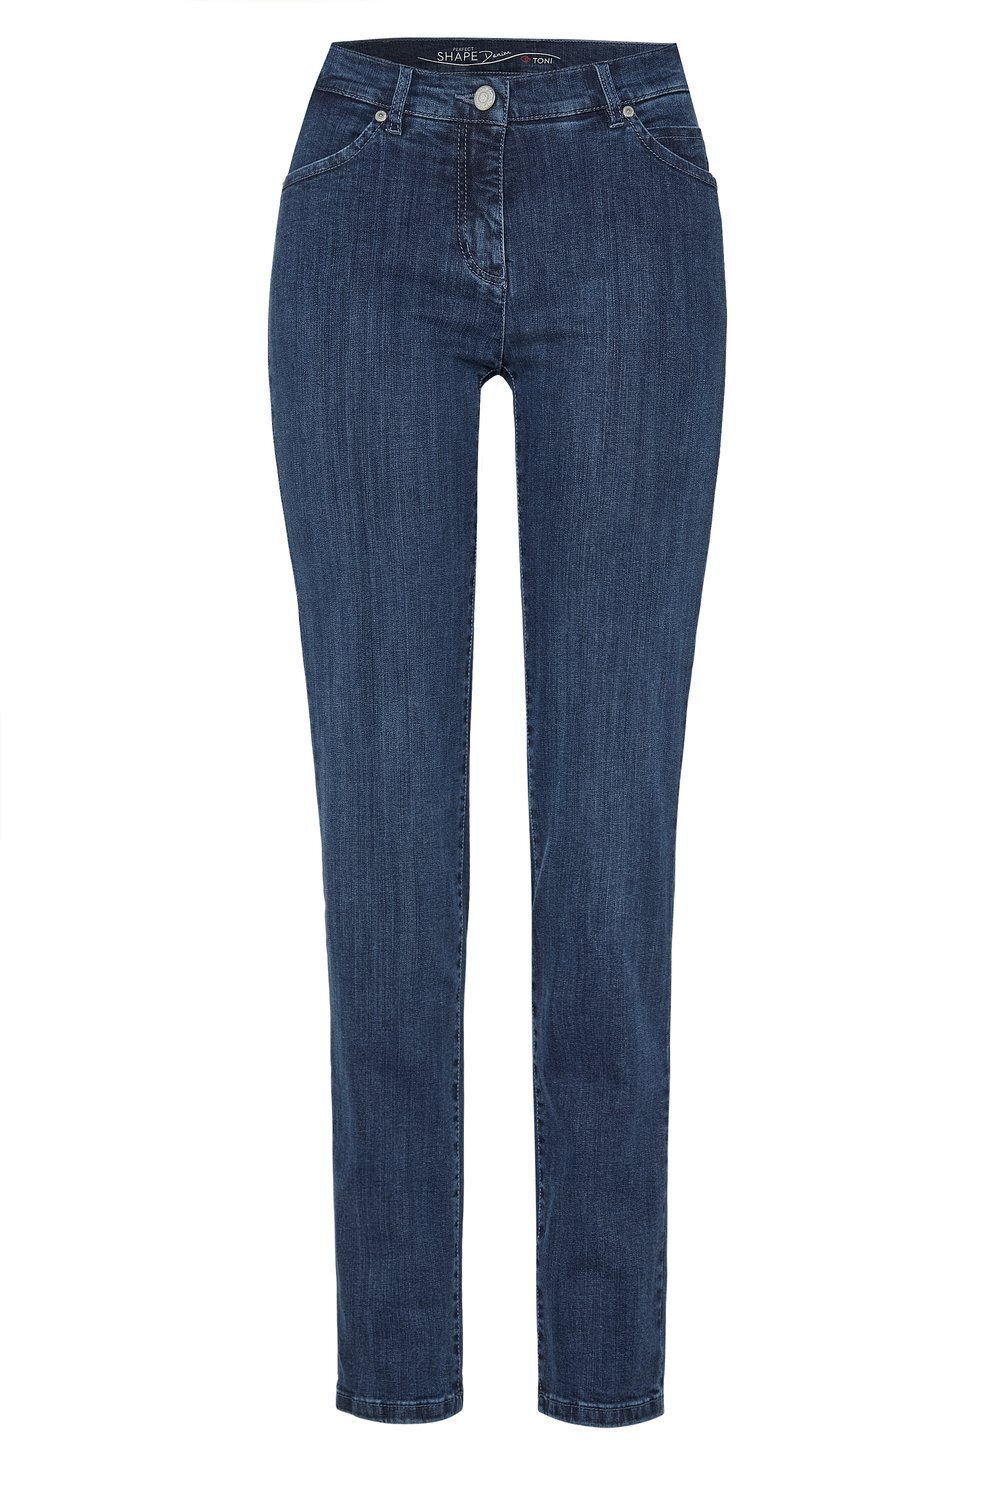 TONI 5-Pocket-Jeans Perfect Shape mit Bauch Shaping-Effekt an und mittelblau 502 Po 